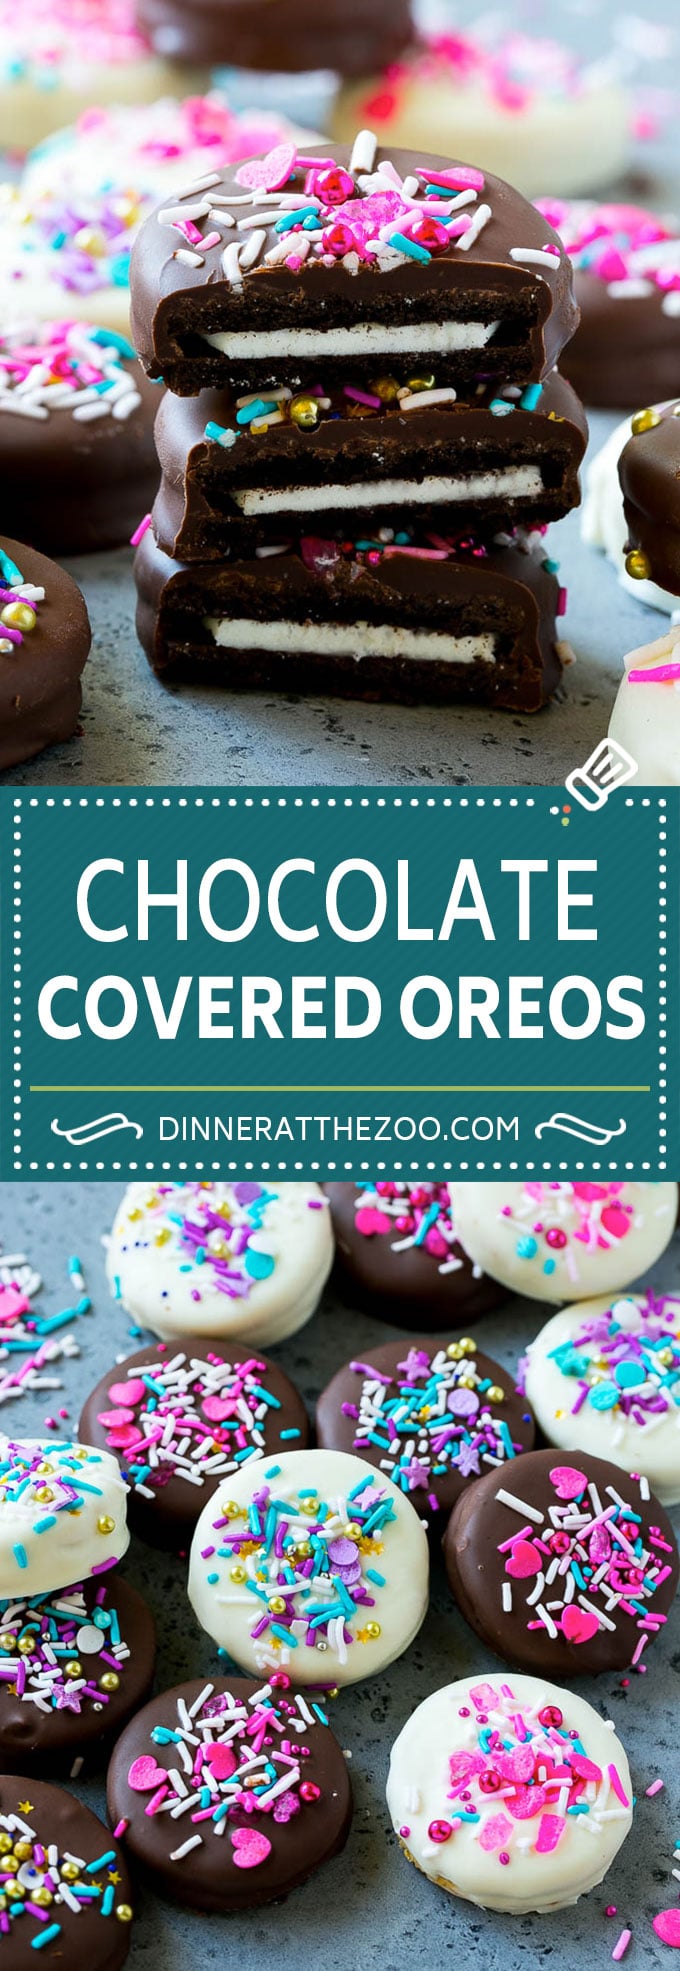 Chocolate Covered Oreos Recipe | Oreo Cookies | Chocolate Dipped Oreos #oreo #cookies #chocolate #sprinkles #dessert #dinneratthezoo